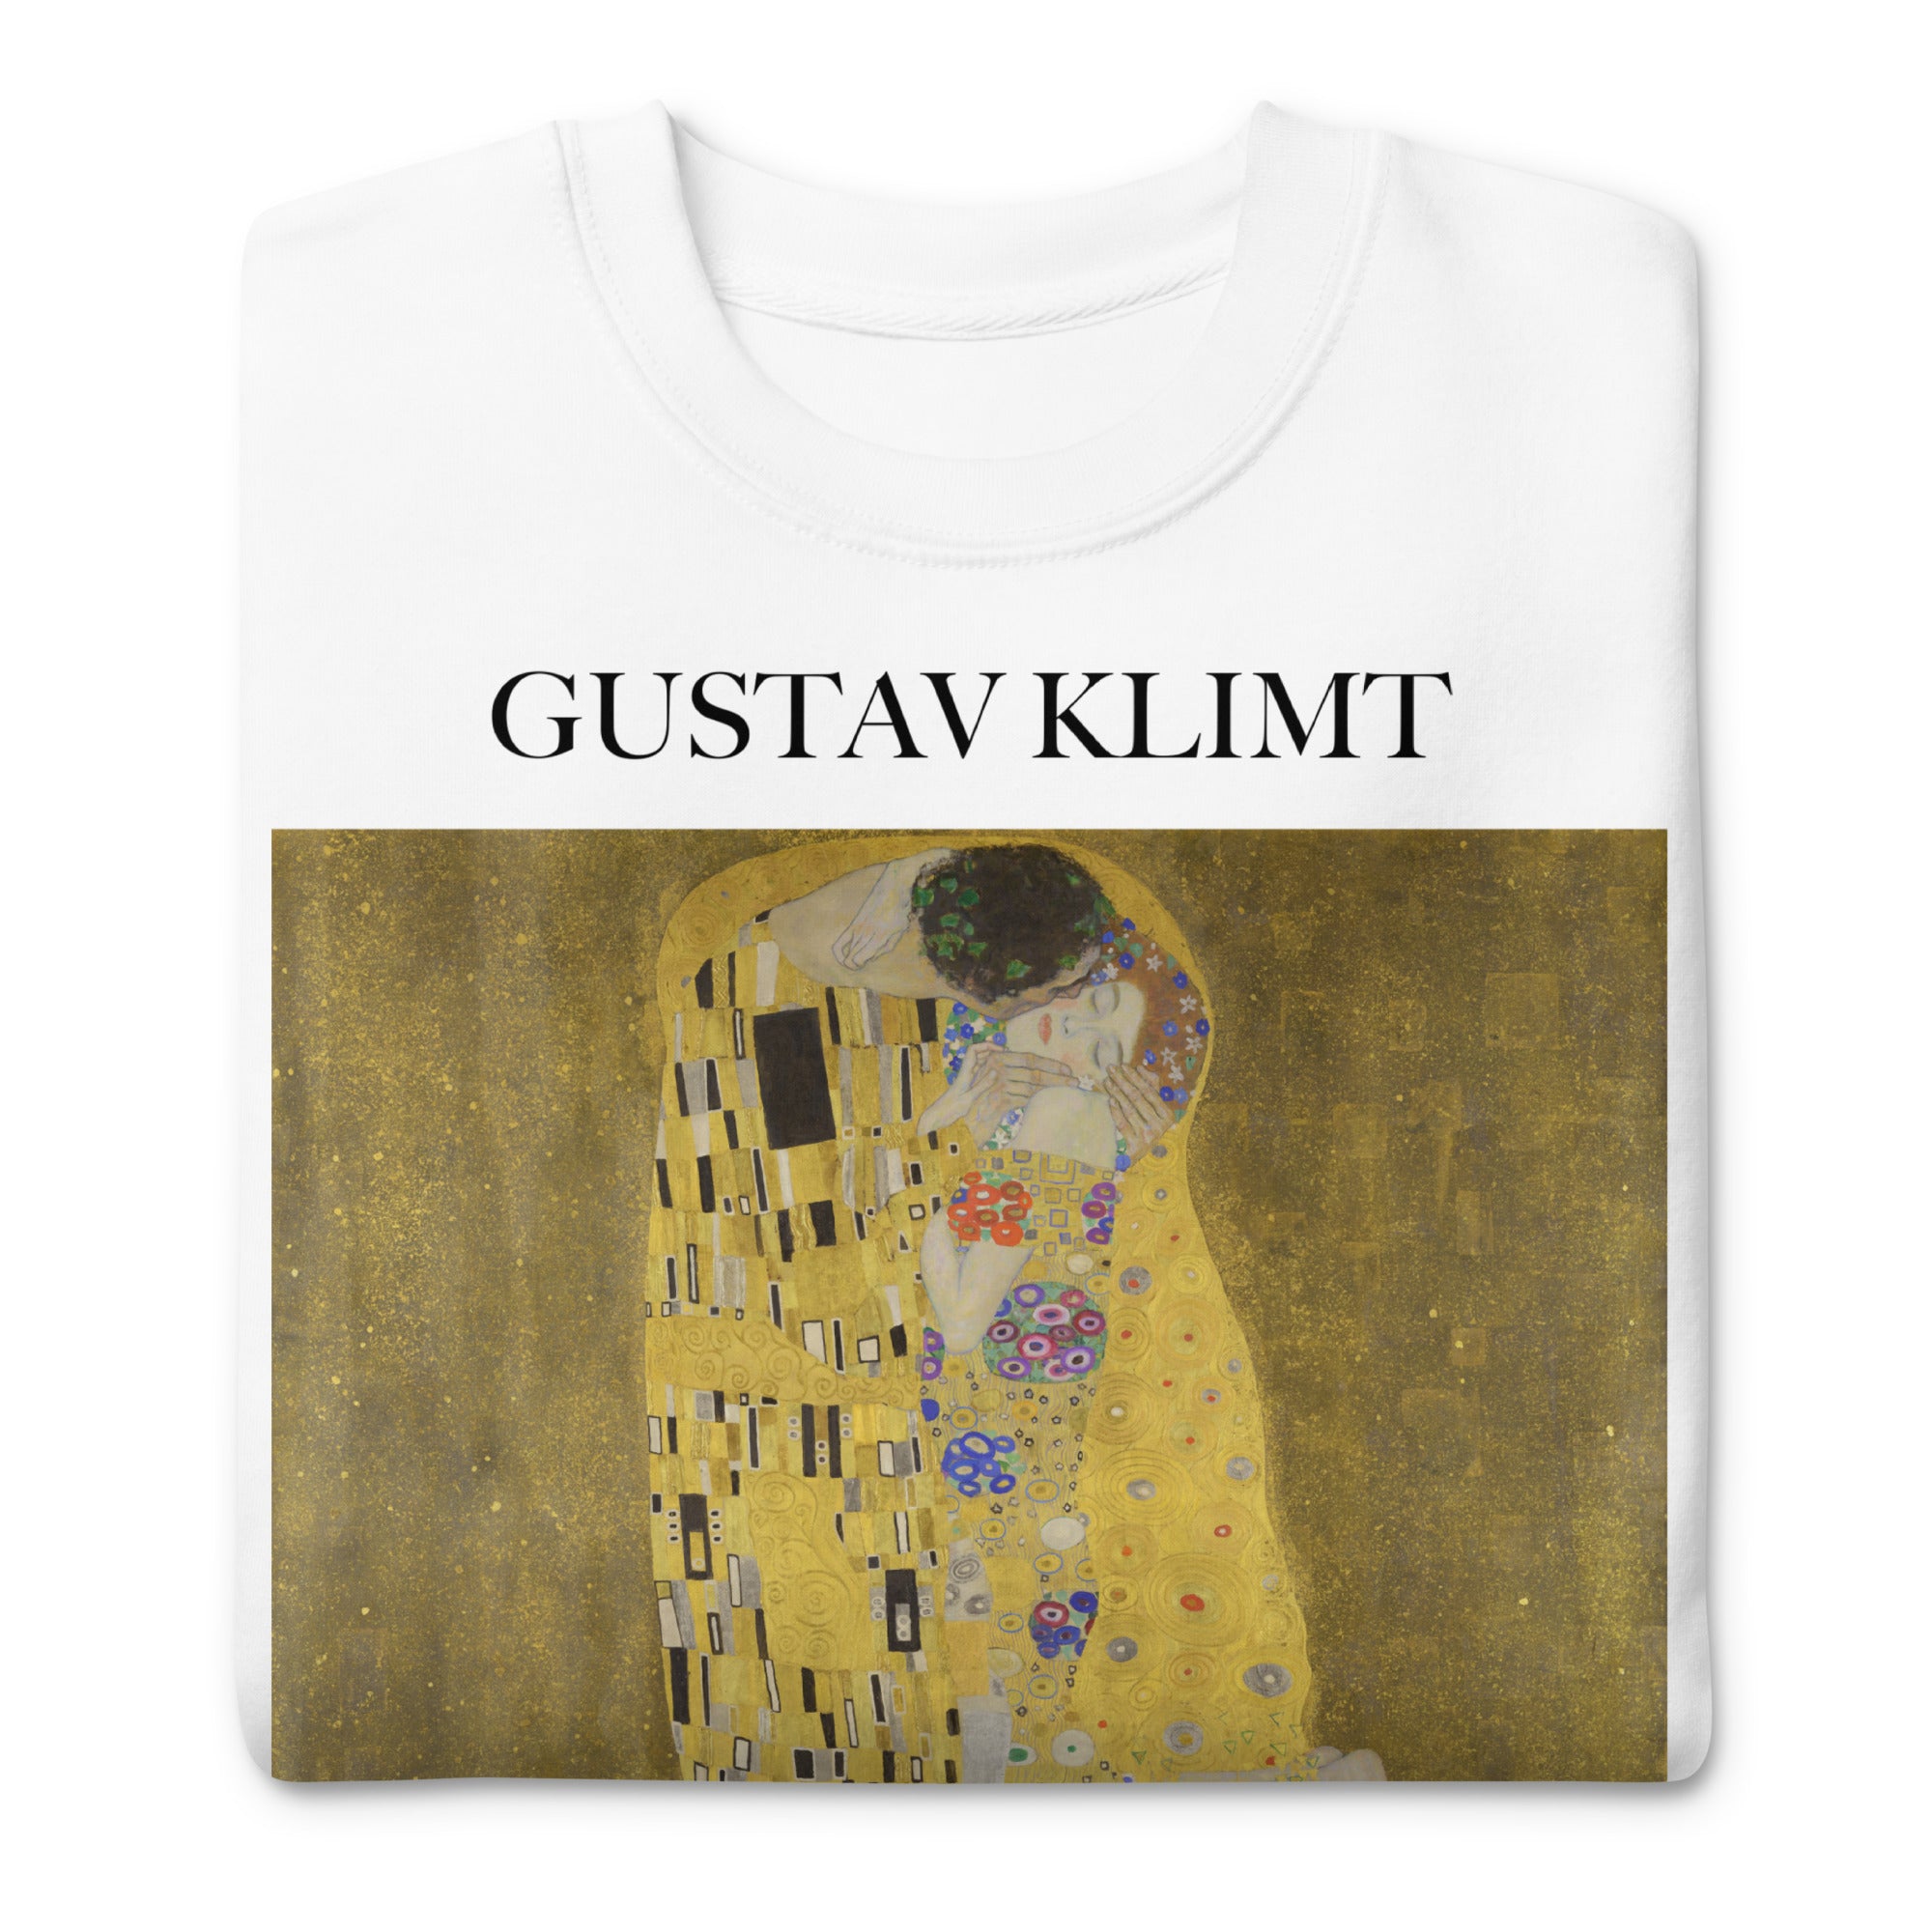 Gustav Klimt 'The Kiss' Famous Painting Sweatshirt | Unisex Premium Sweatshirt